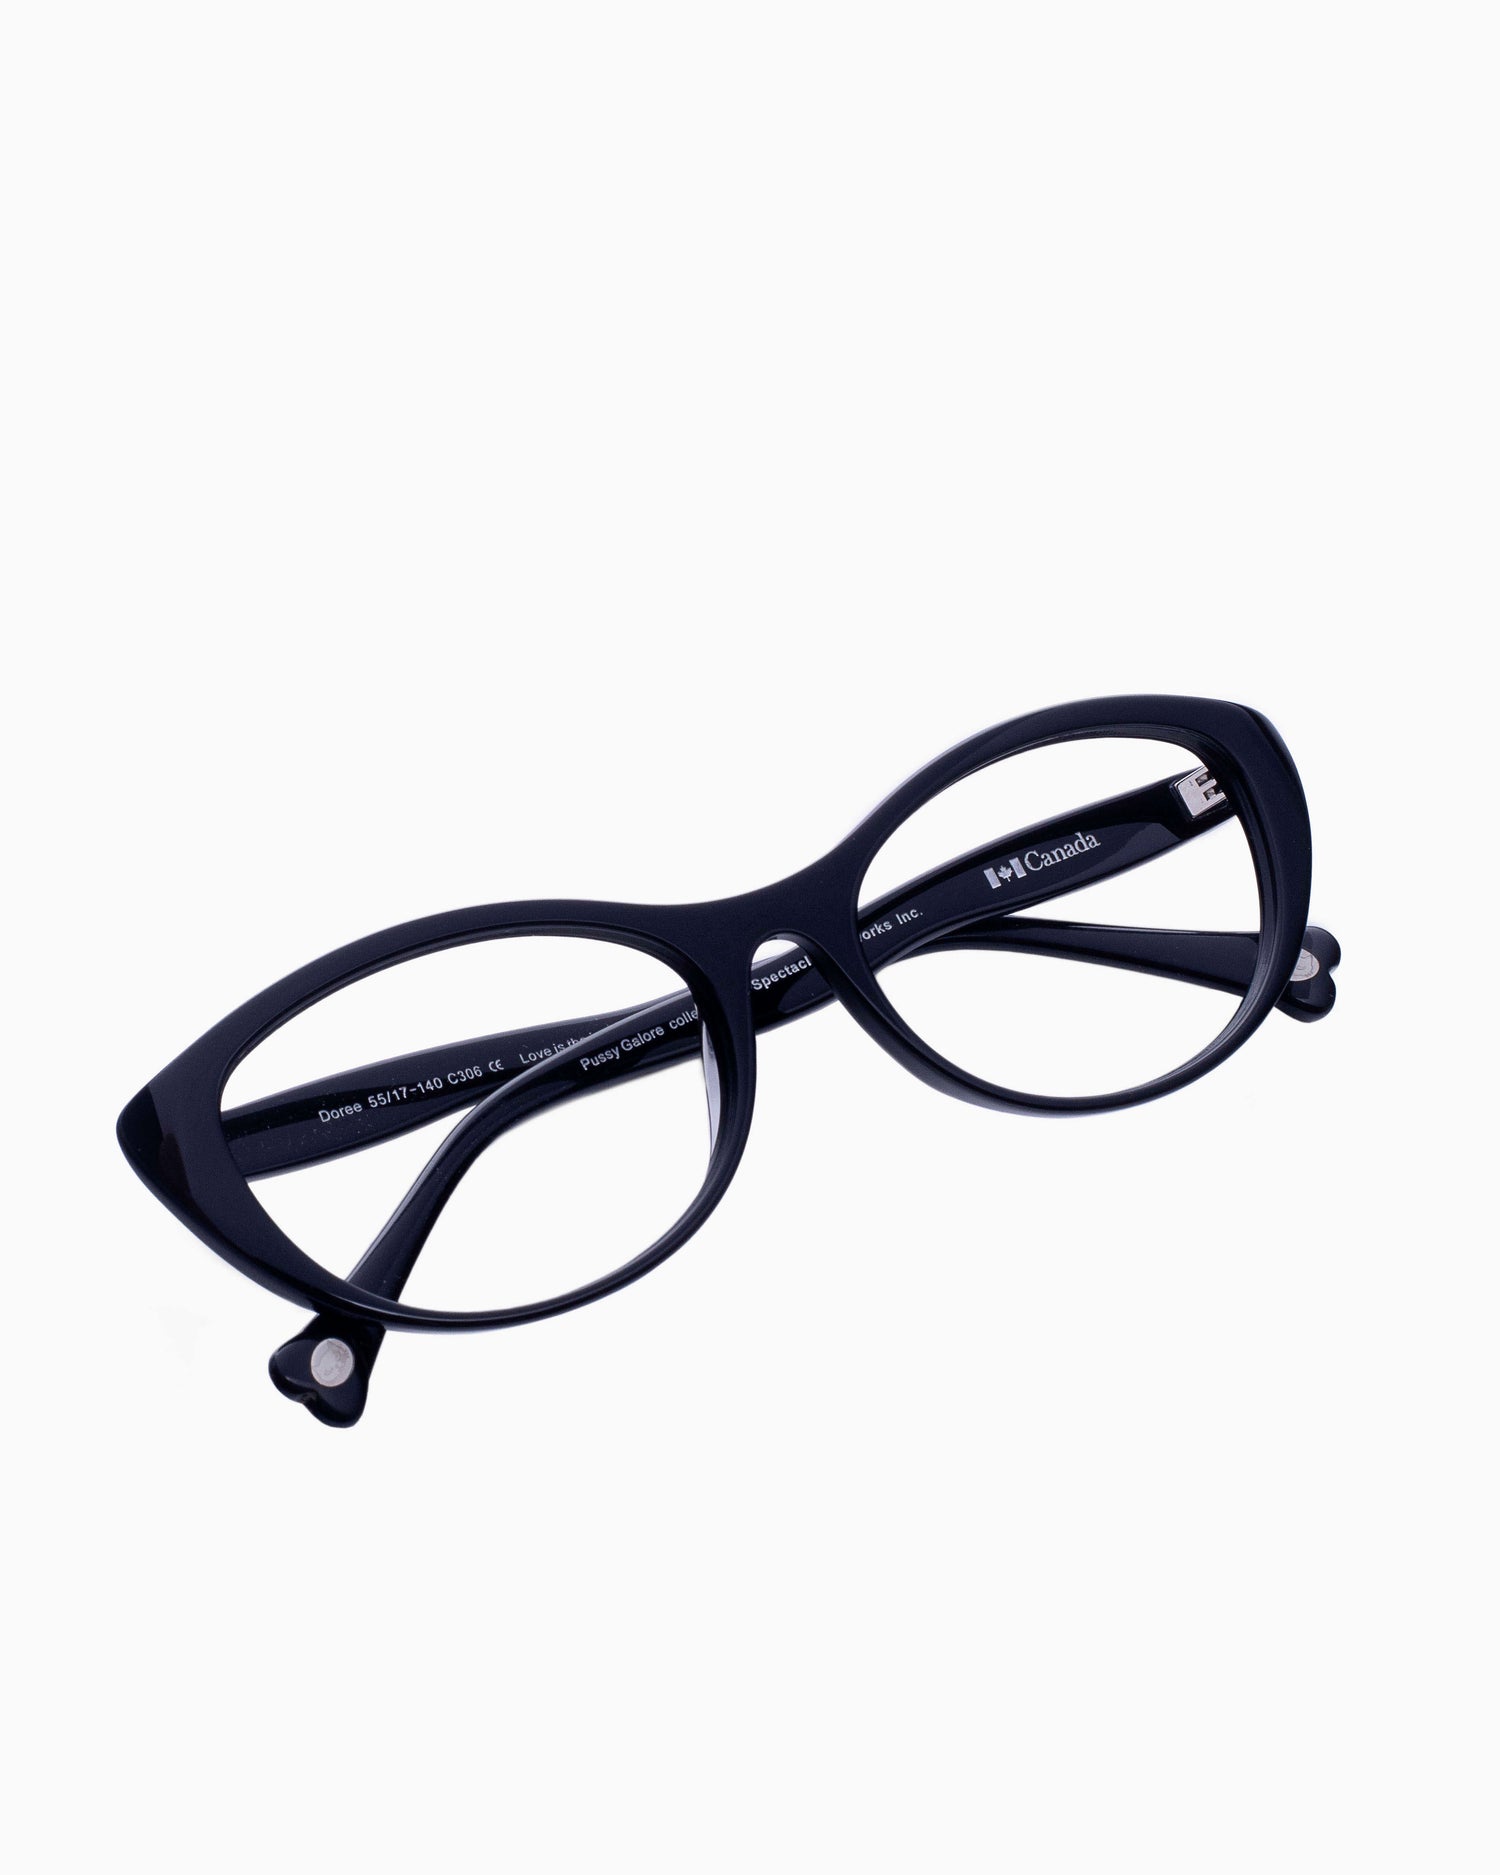 Spectacleeyeworks - Golden - C306 | glasses bar:  Marie-Sophie Dion